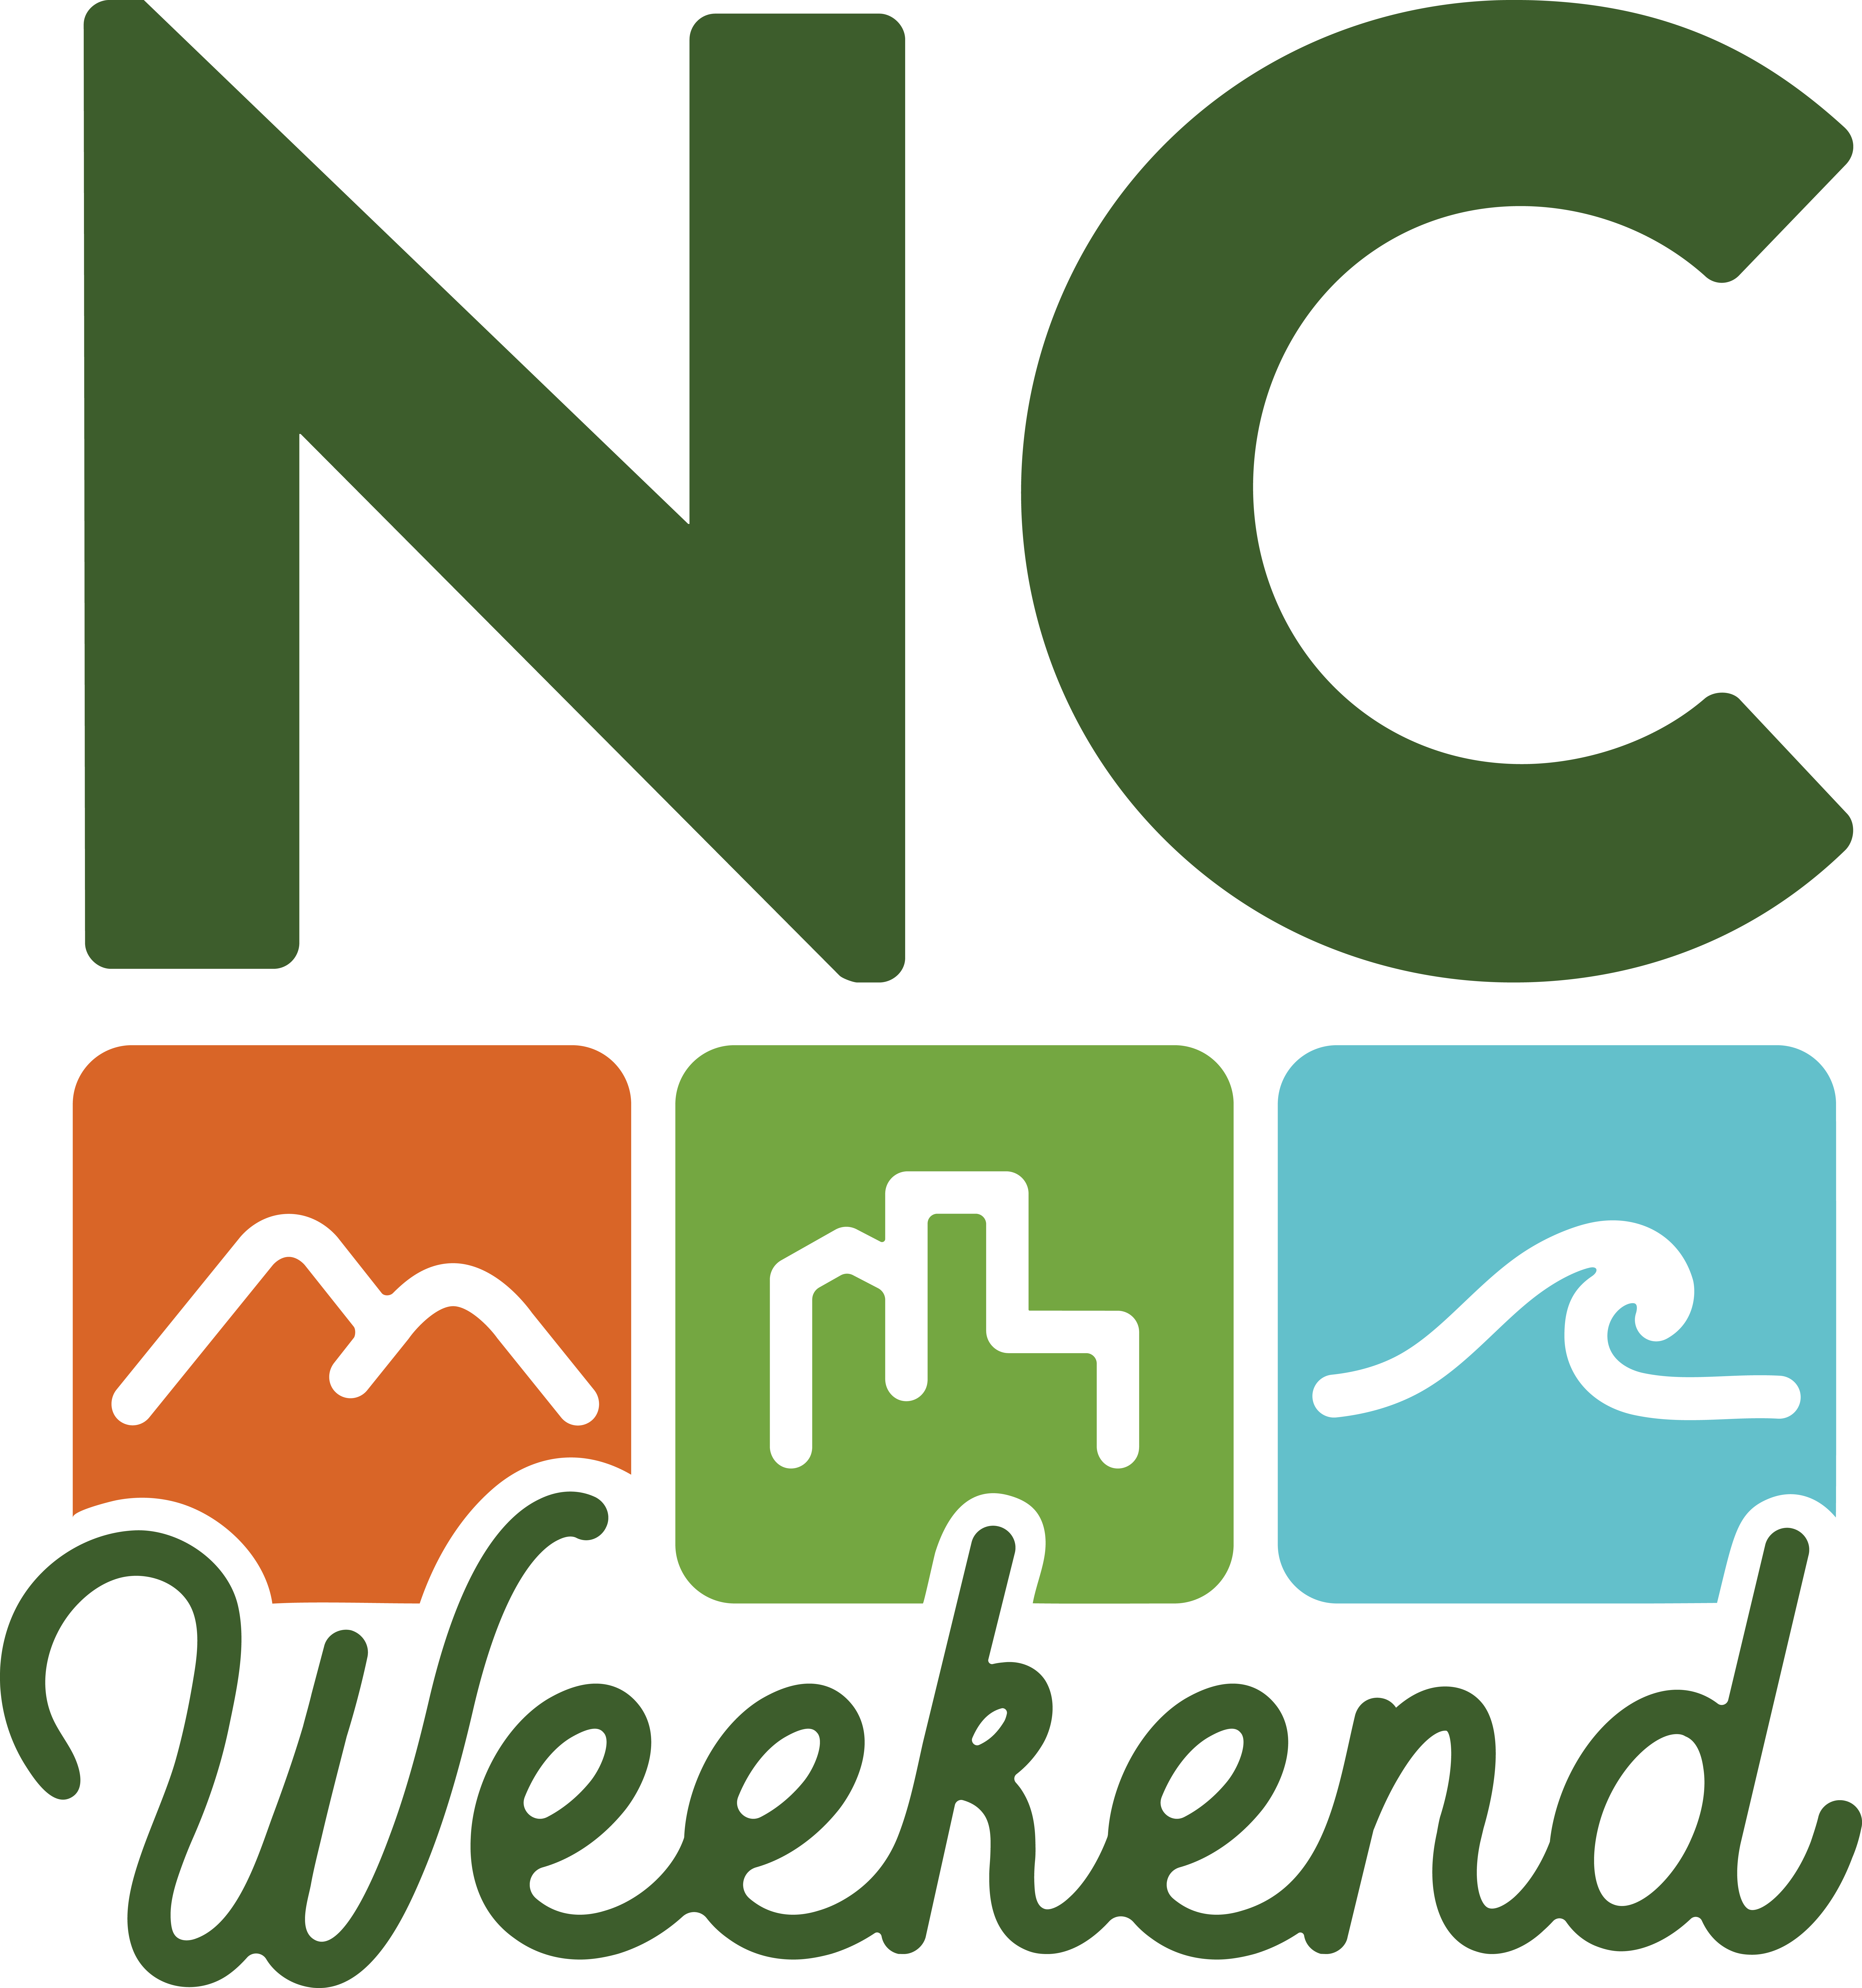 NC Weekend logo in color